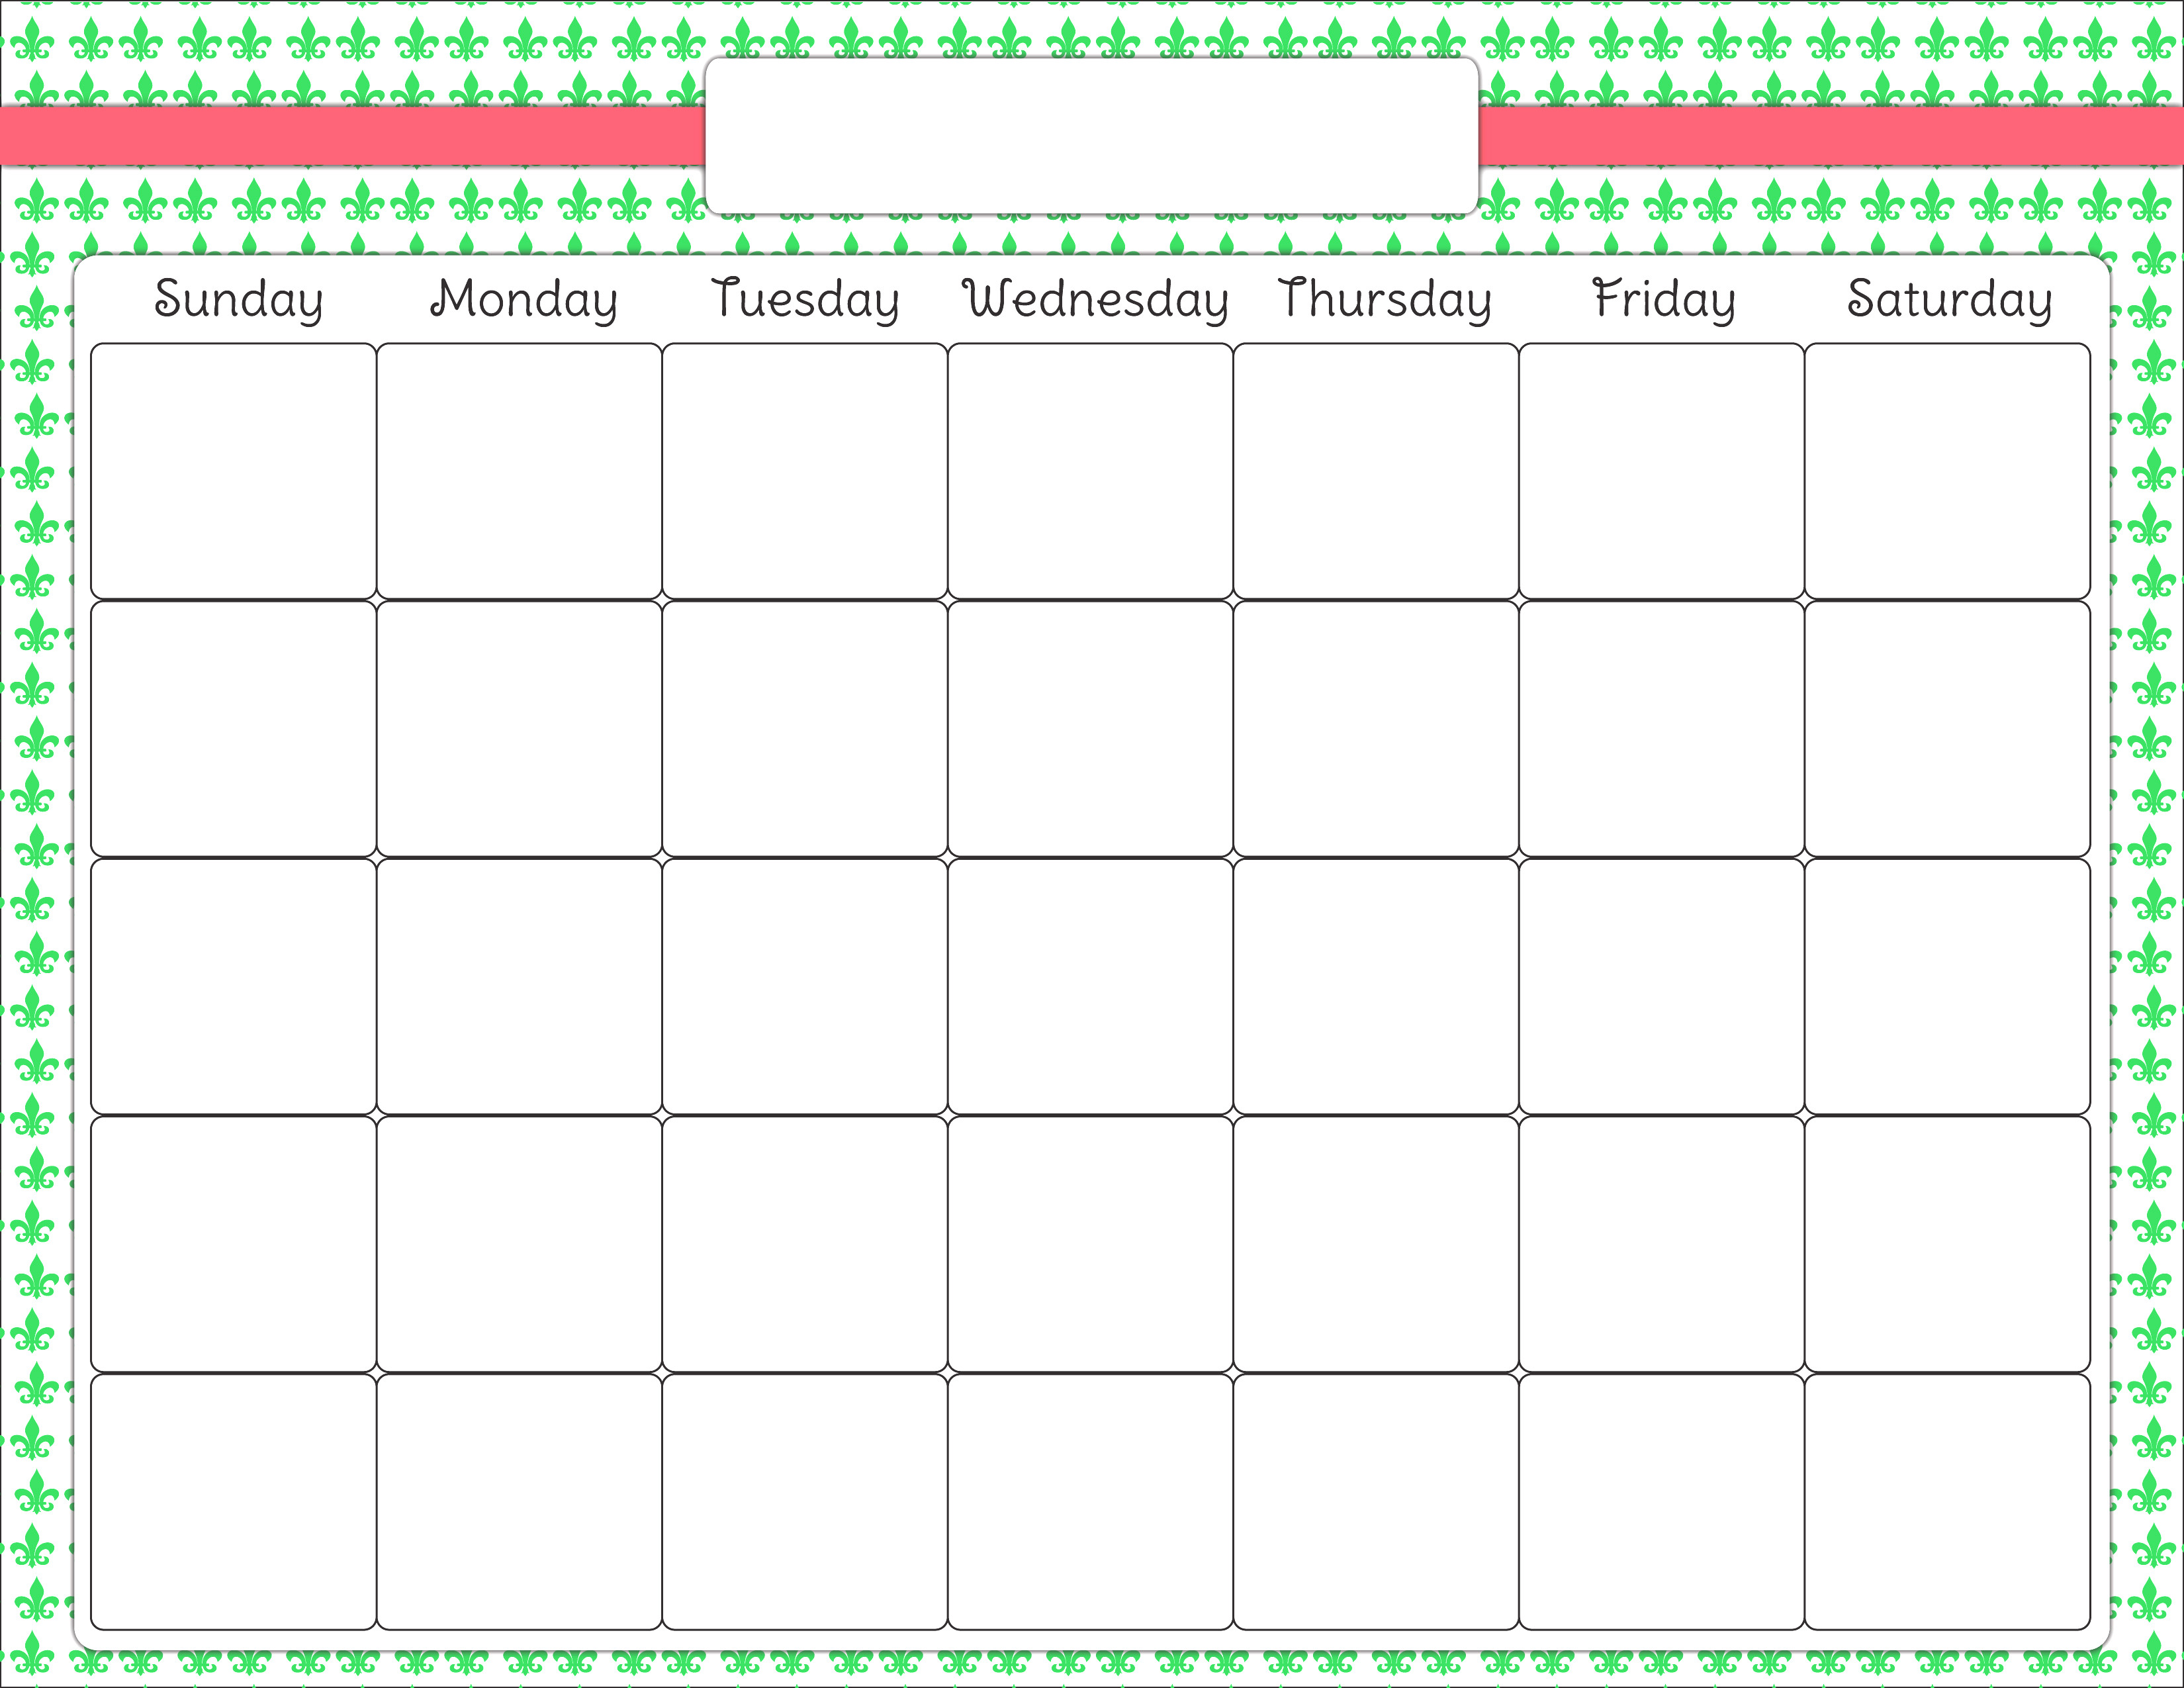 Blank Calendar Download - Customize and Print